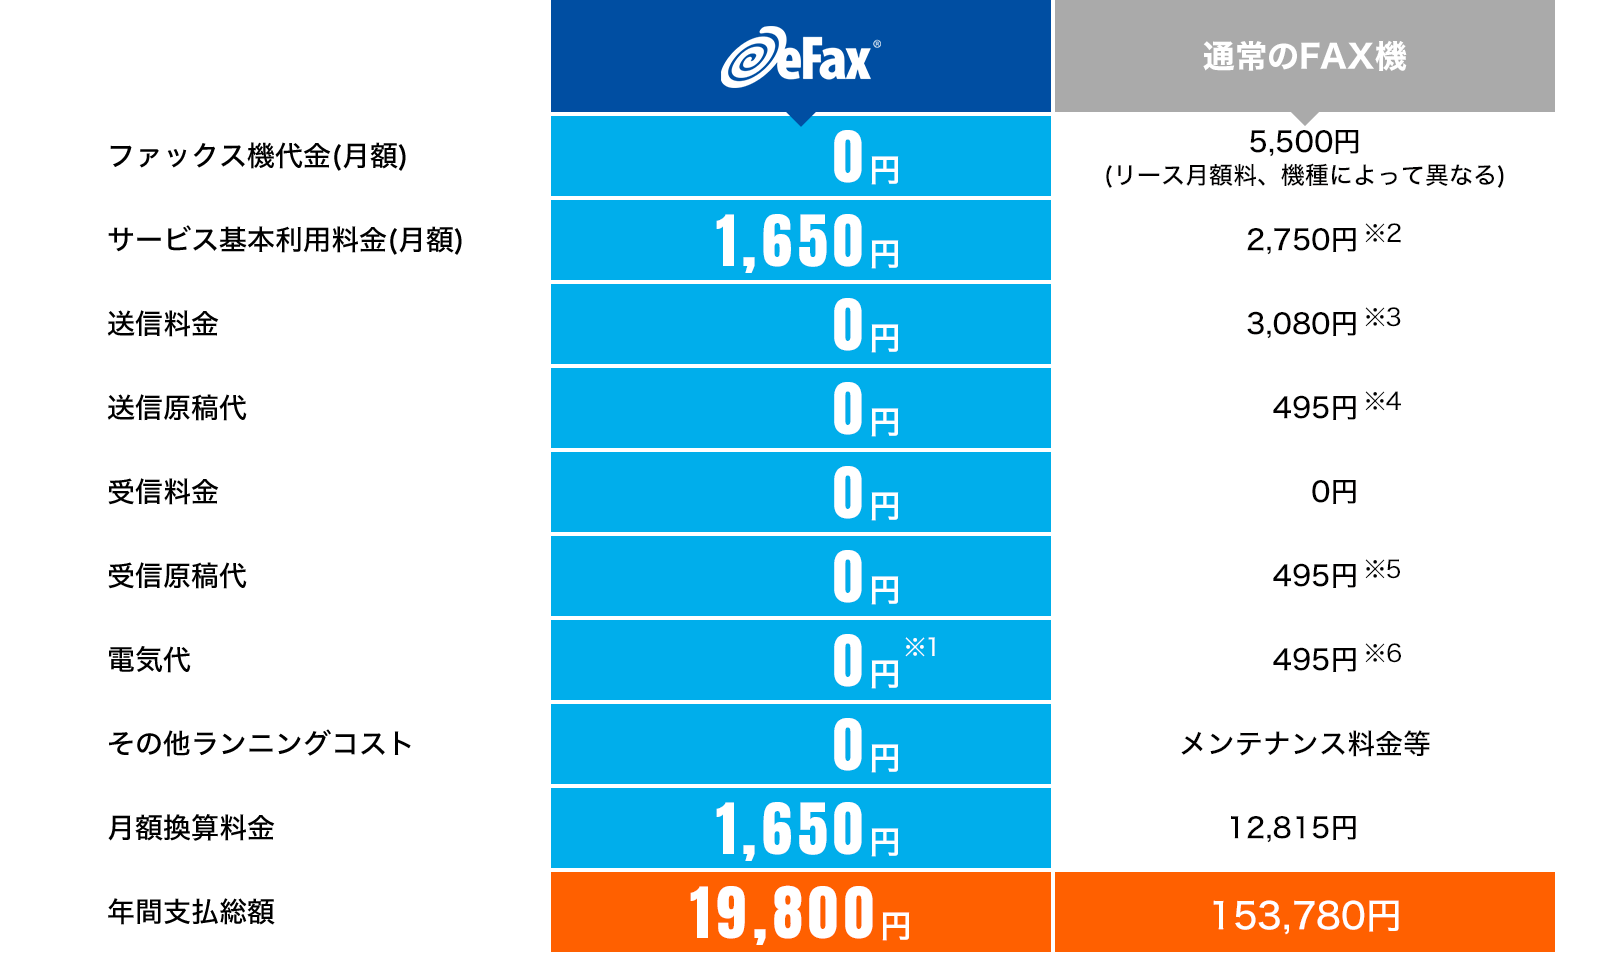 FAX機とeFaxを使用した場合のコスト比較表